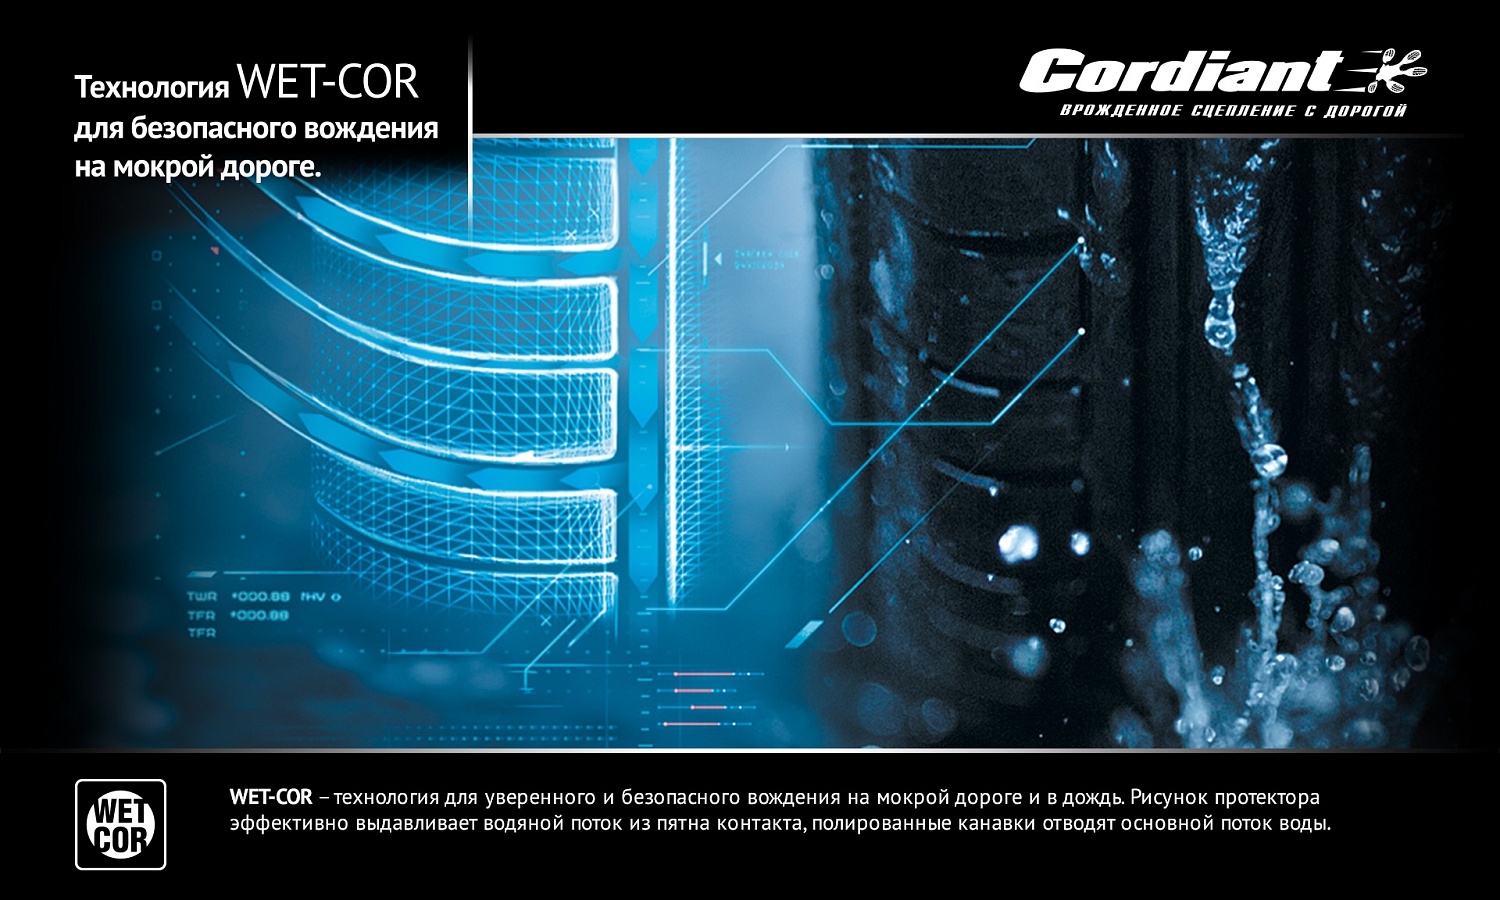 Cordiant Comfort 2 - преимущества и технологии